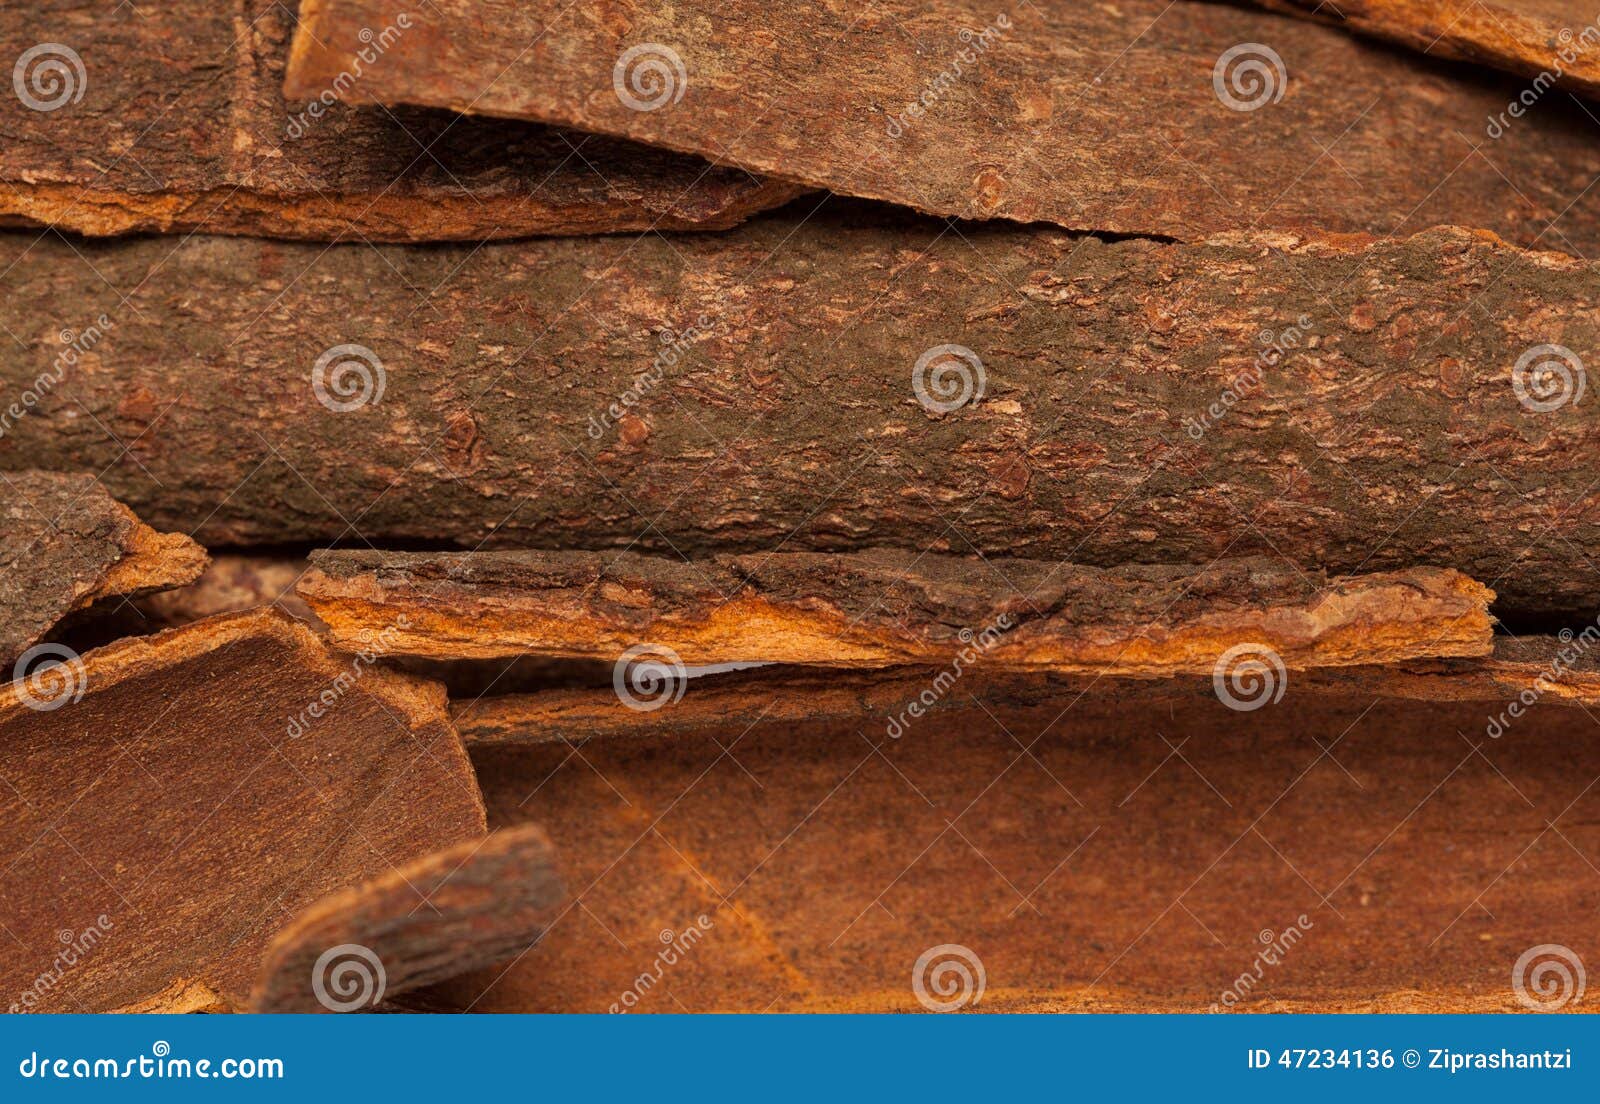 cinnamomum camphora or cinnamon bark